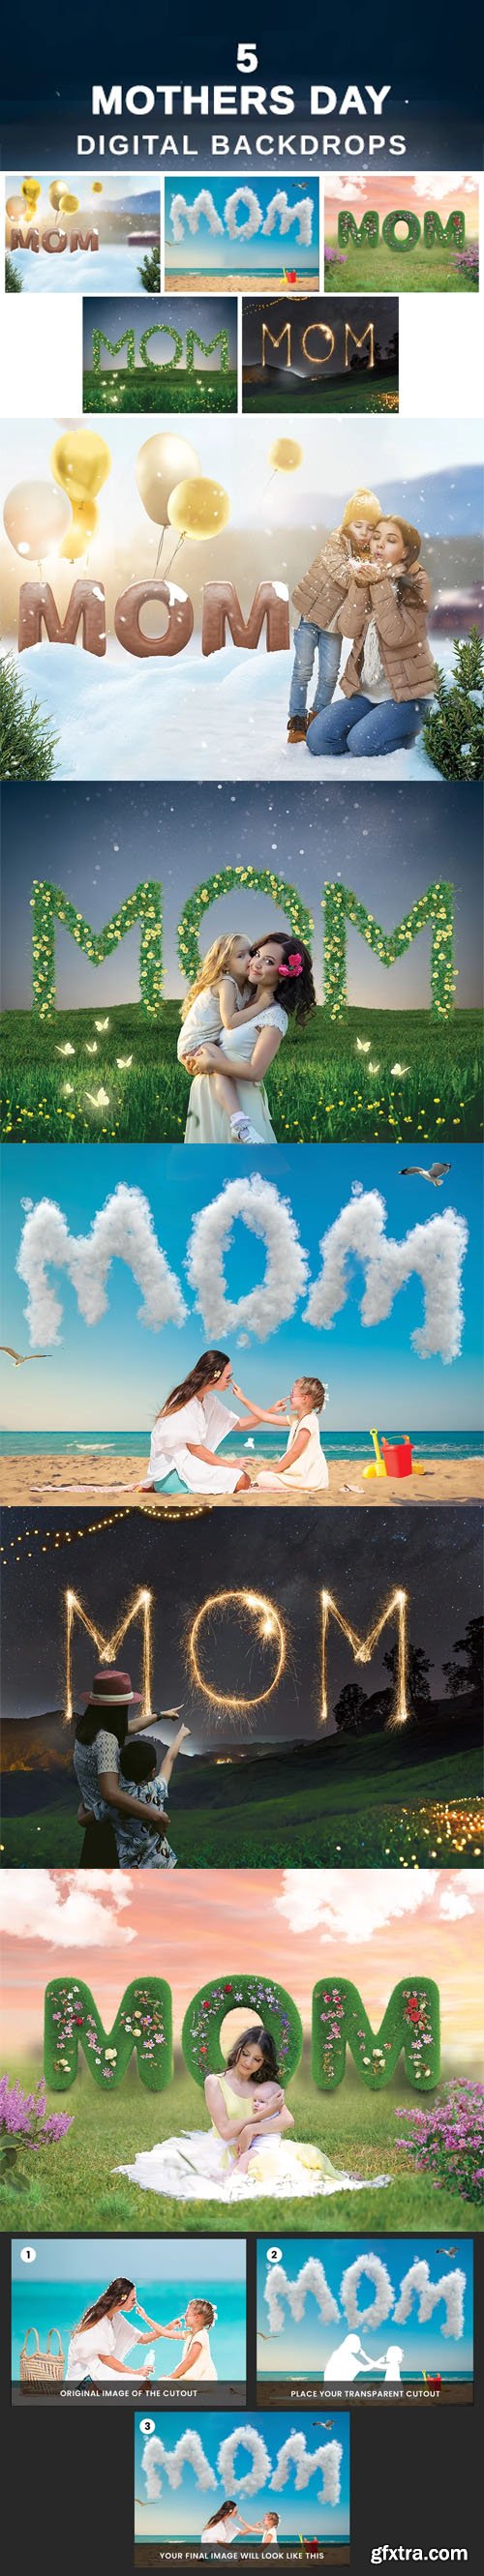 Elegant Mother's Day Digital Overlays for Photoshop